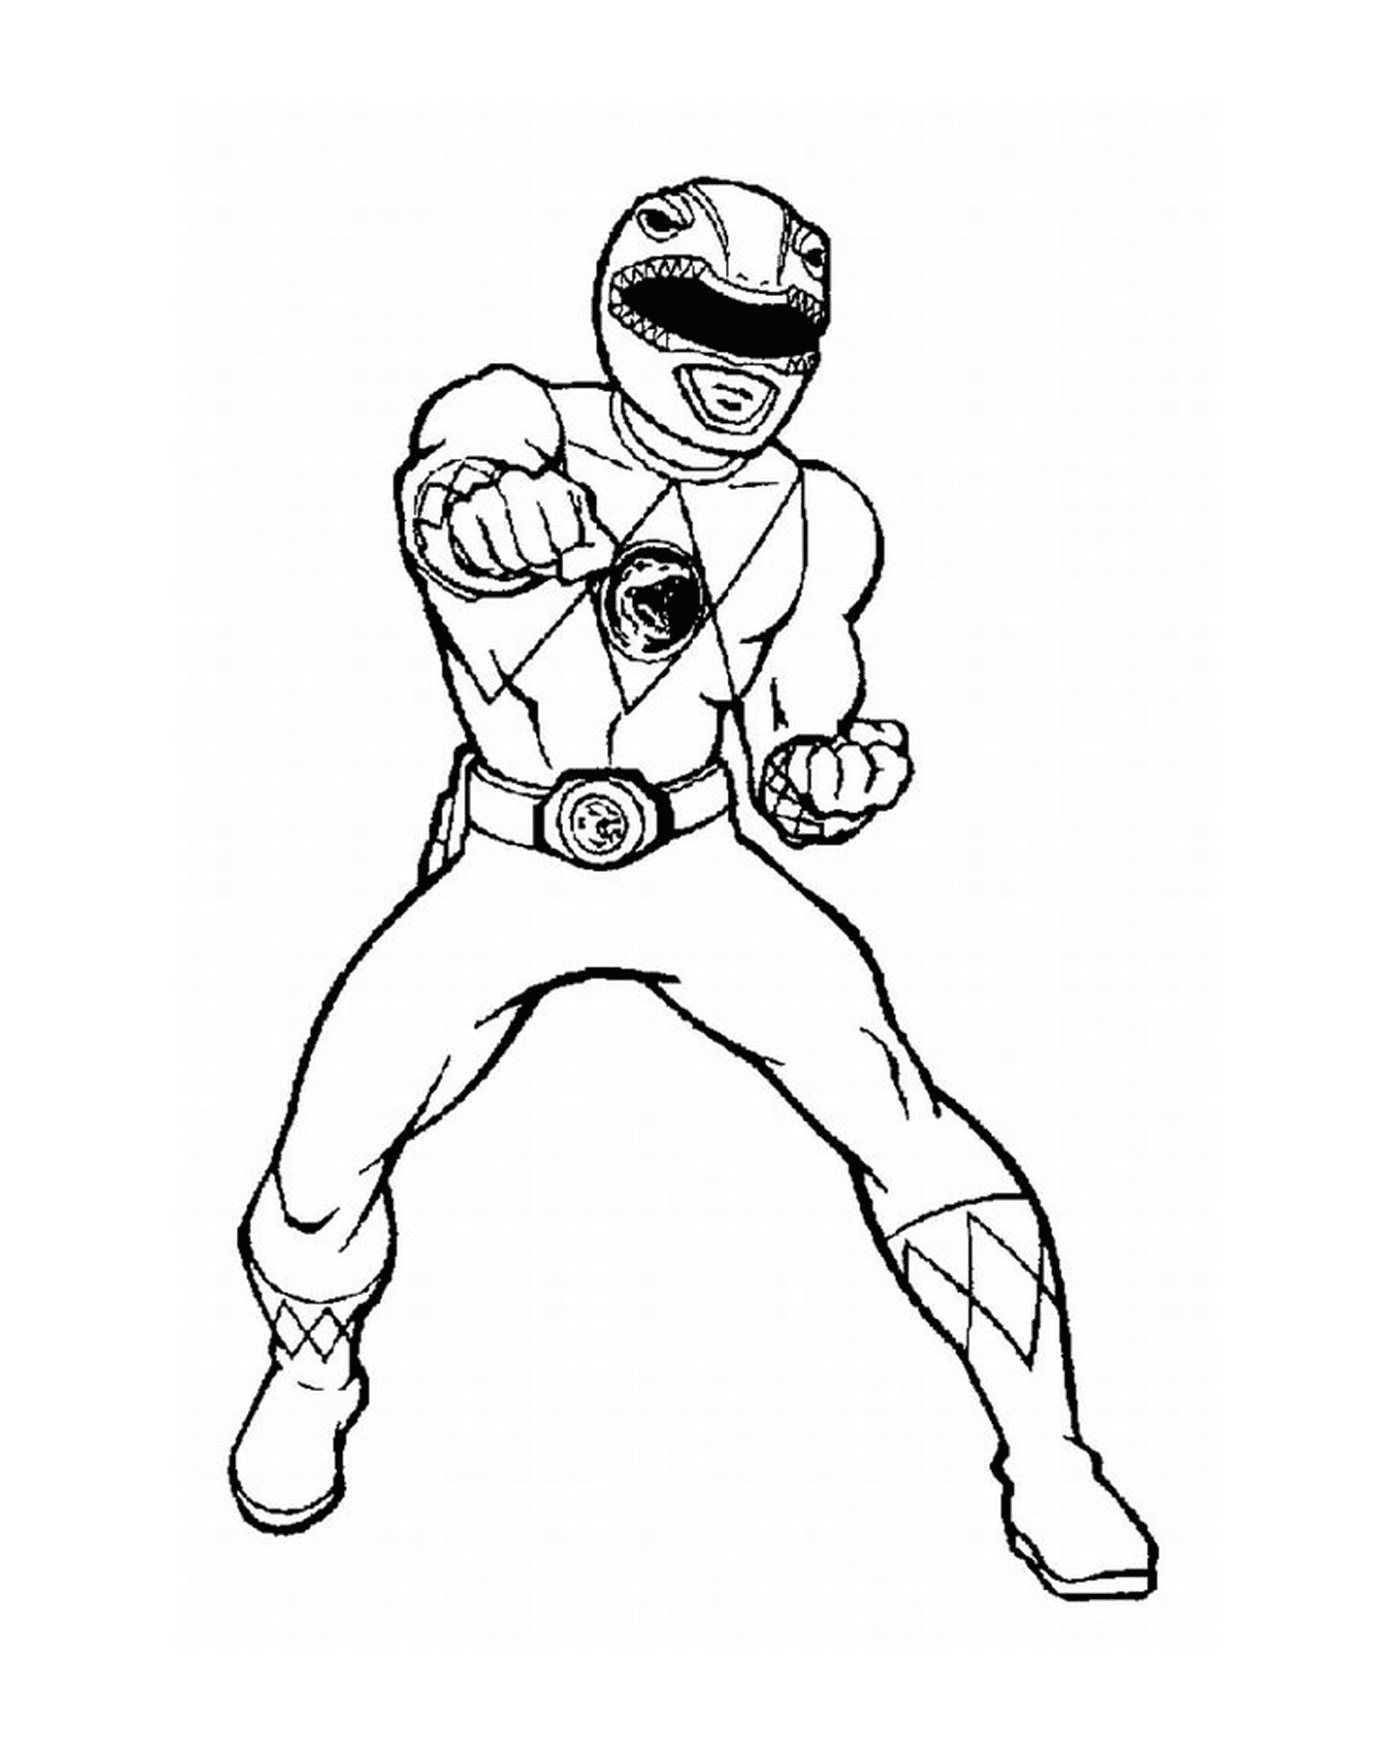  Jungle Fury's Power Ranger pratica il karate 